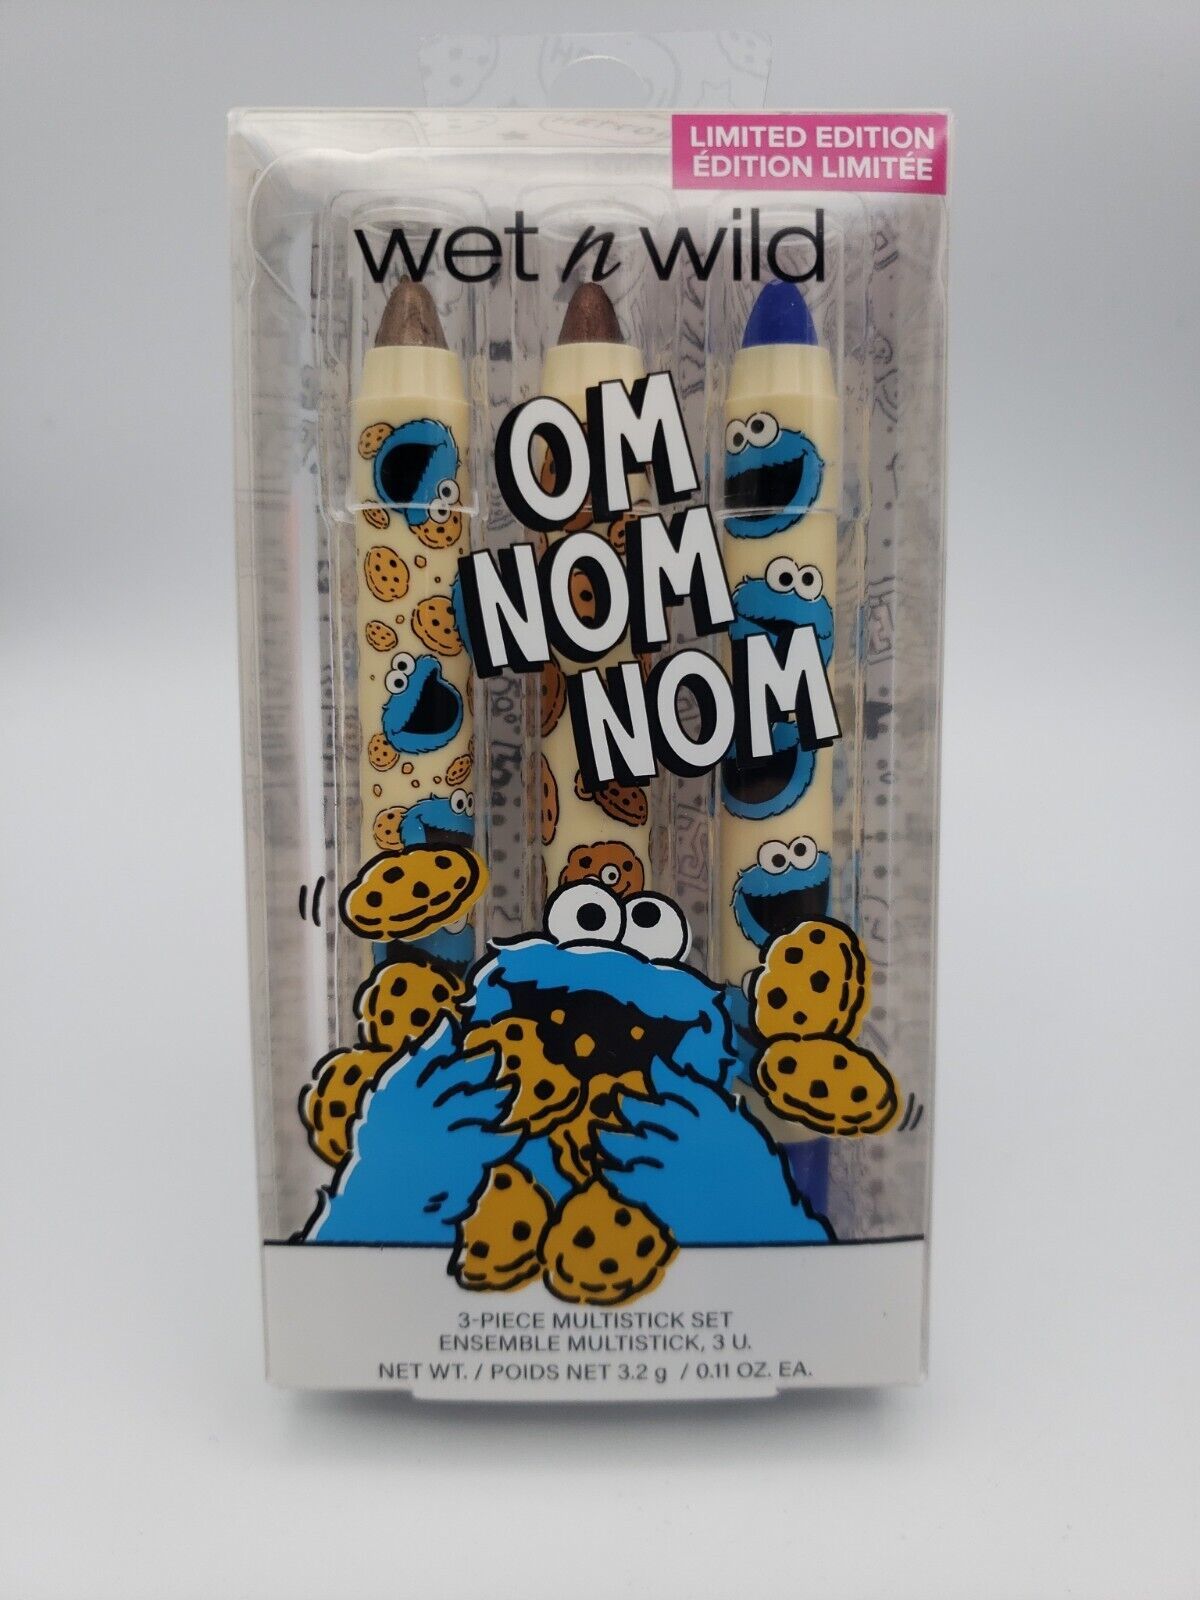 Wet n Wild SESAME STREET Multistick OM NOM NOM 3 Piece Set COOKIE MONSTER - $11.57